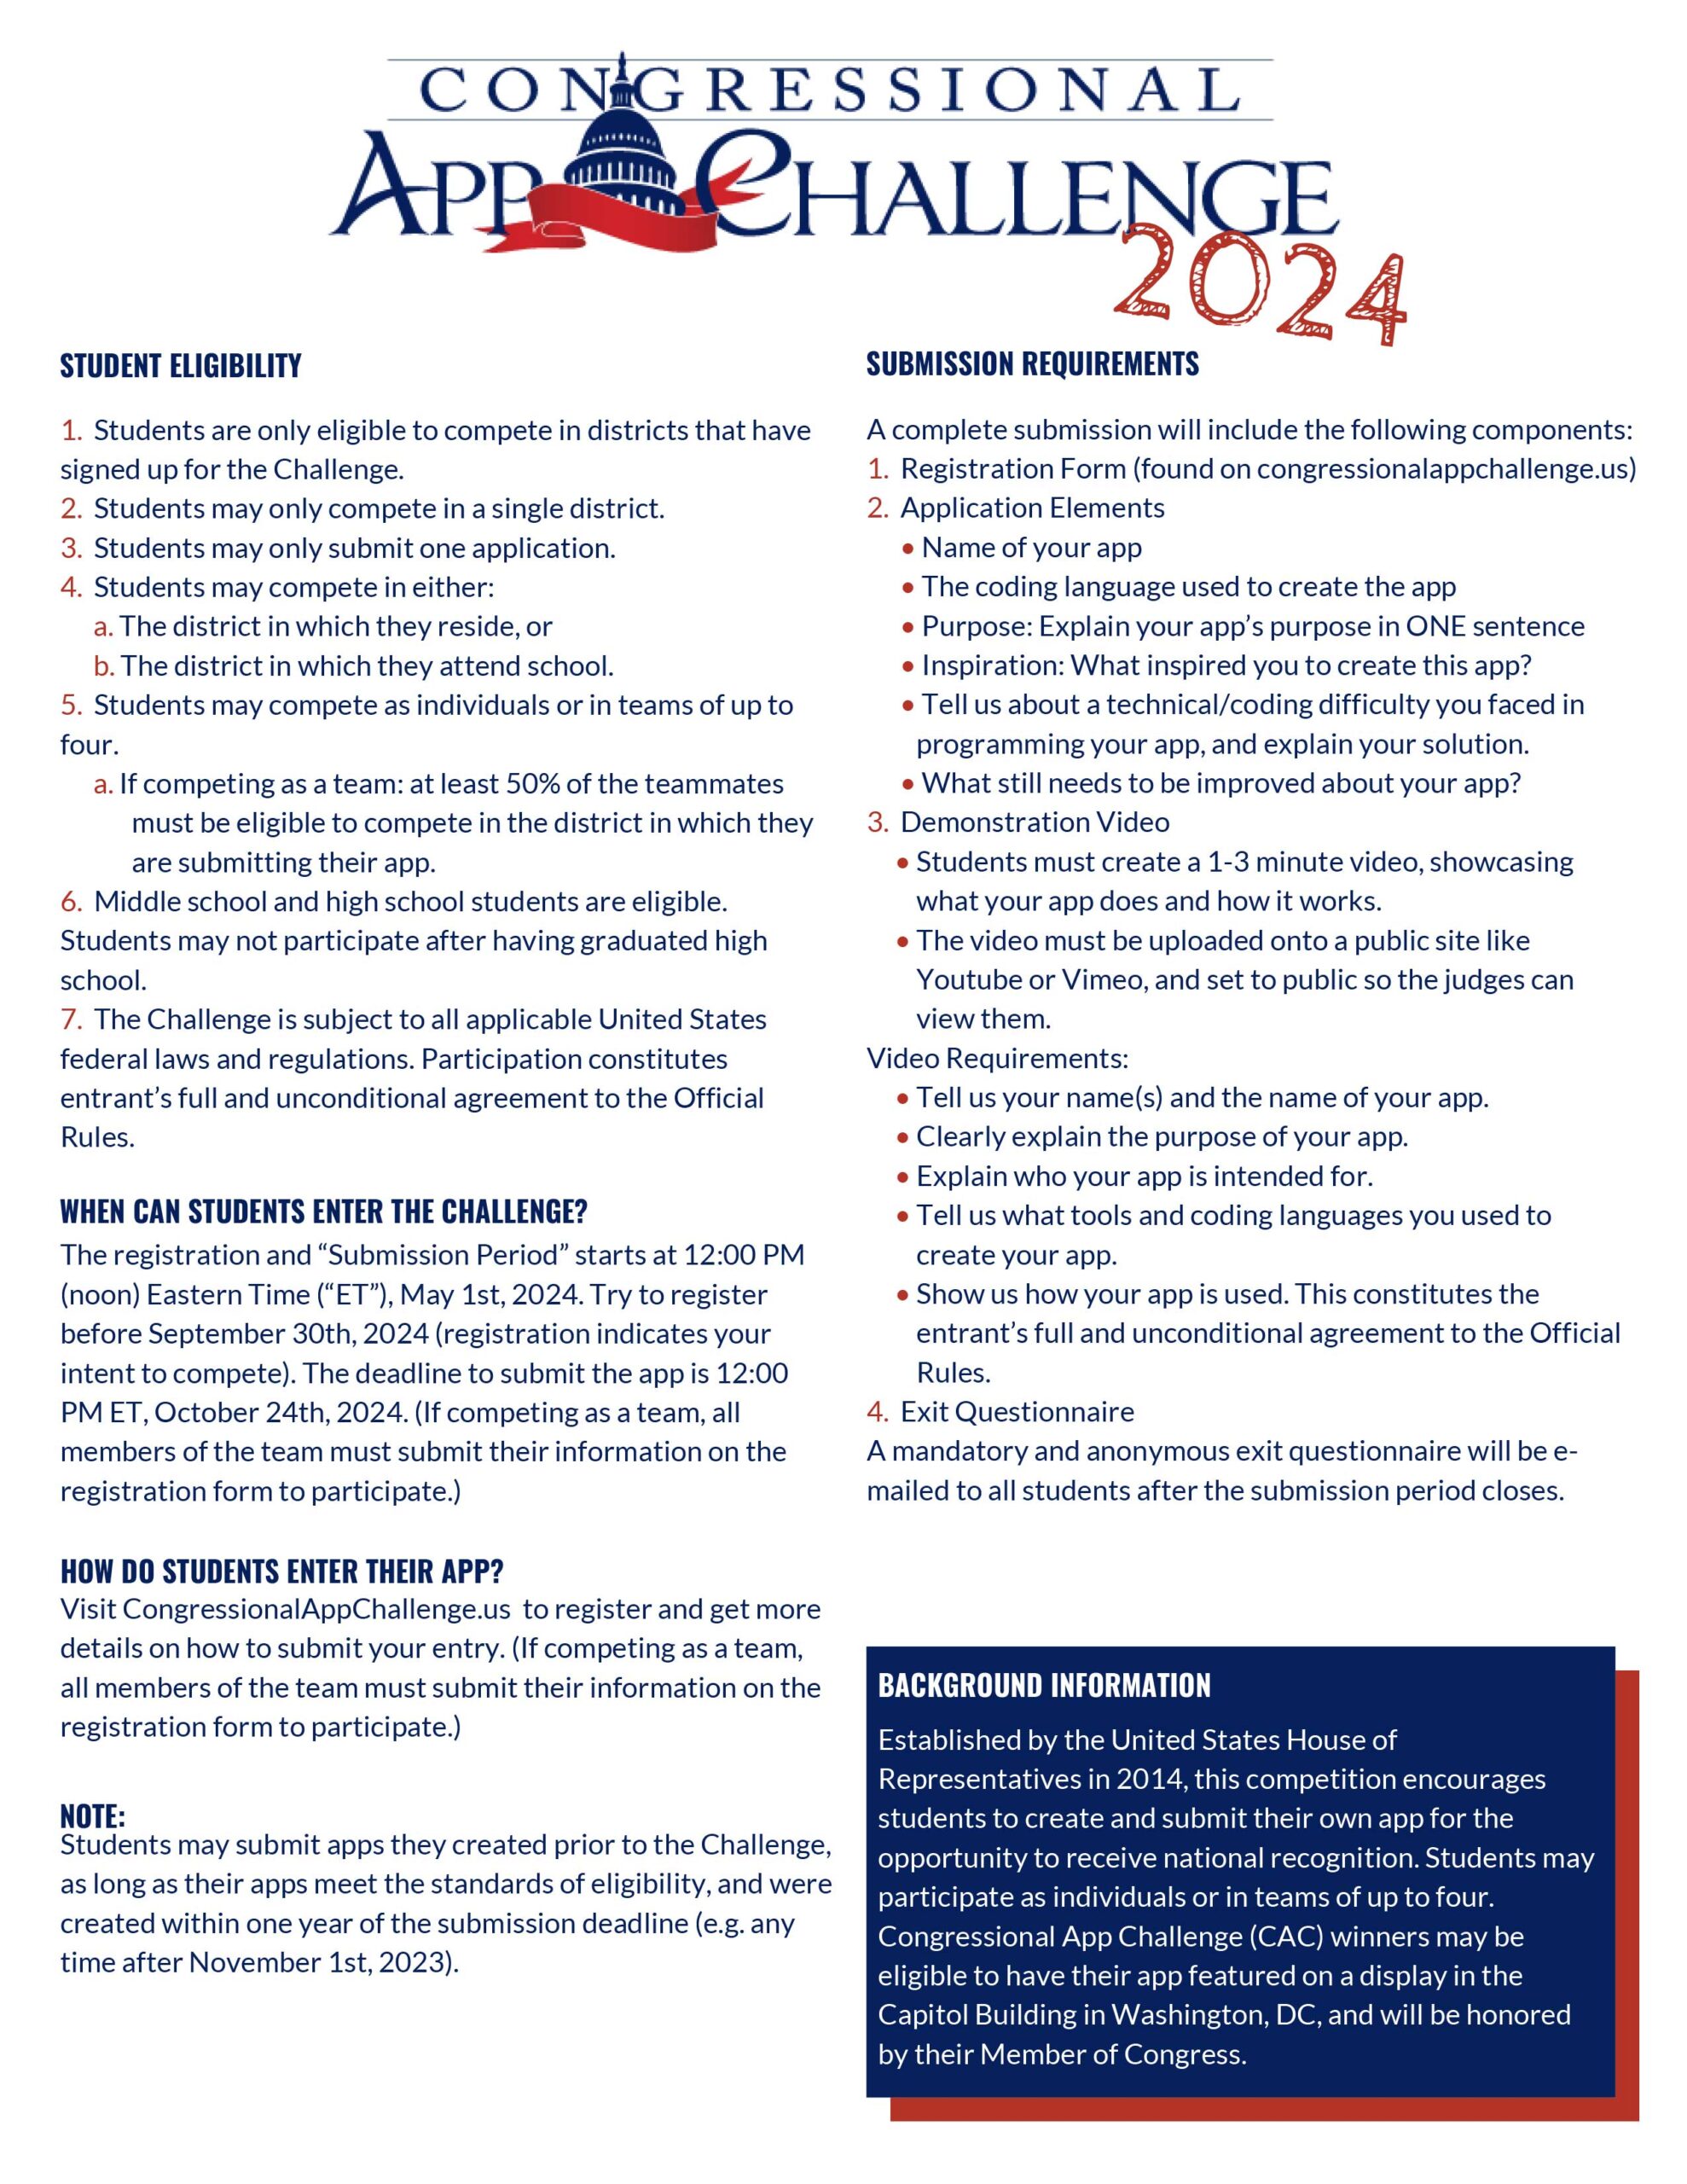 Congress Challenge 2024 information flyer 